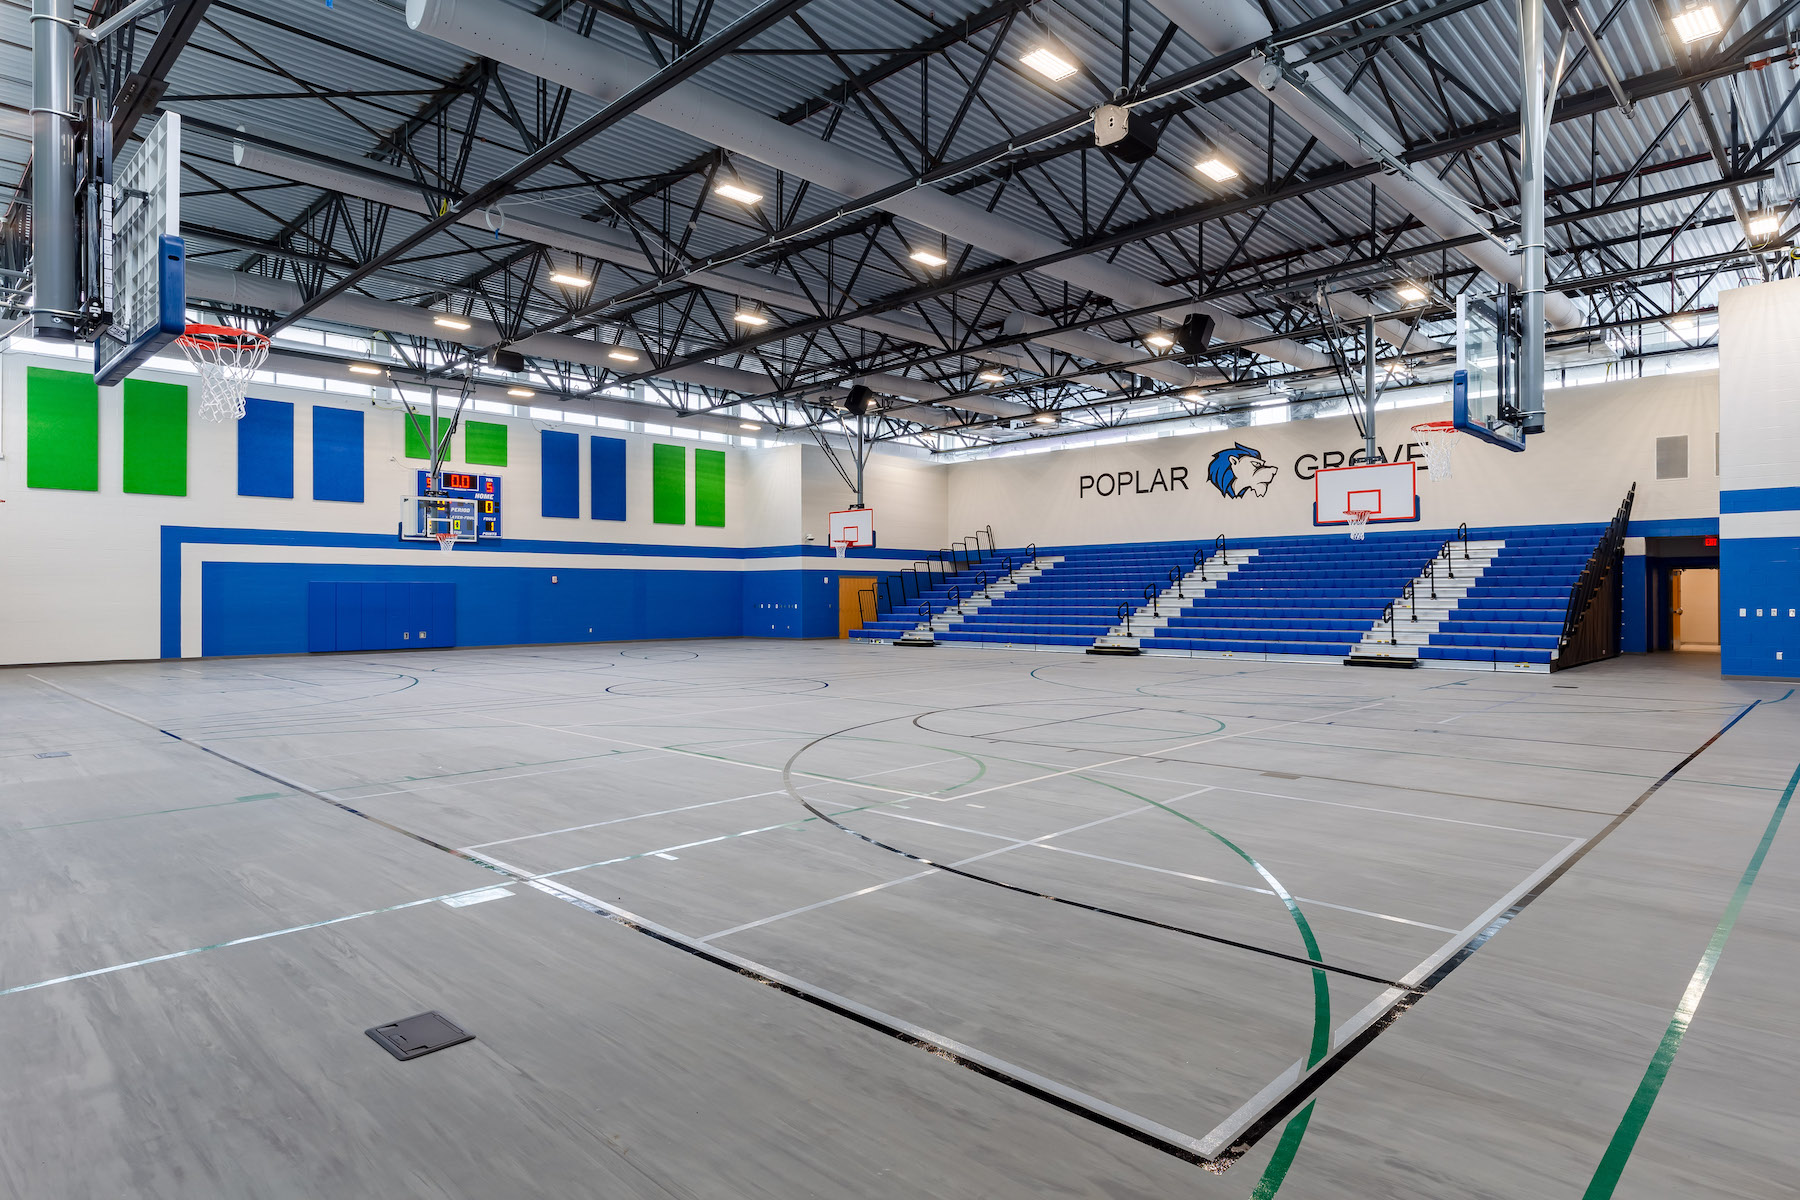 The new gymnasium at Poplar Grove Elementary School